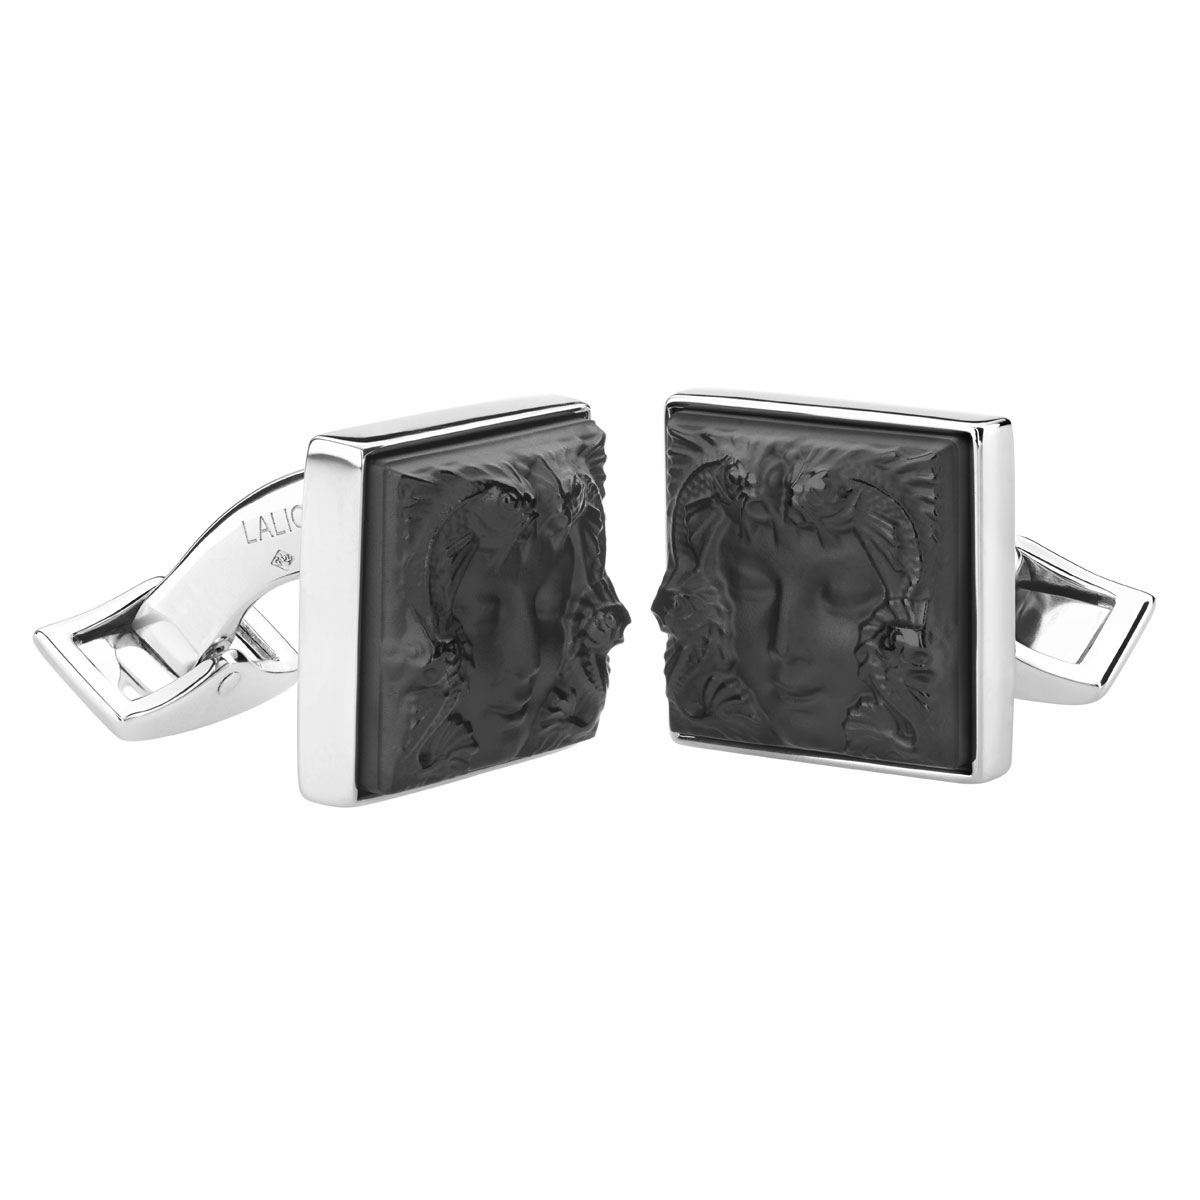 Lalique Arethuse Crystal Cufflinks Pair, Black